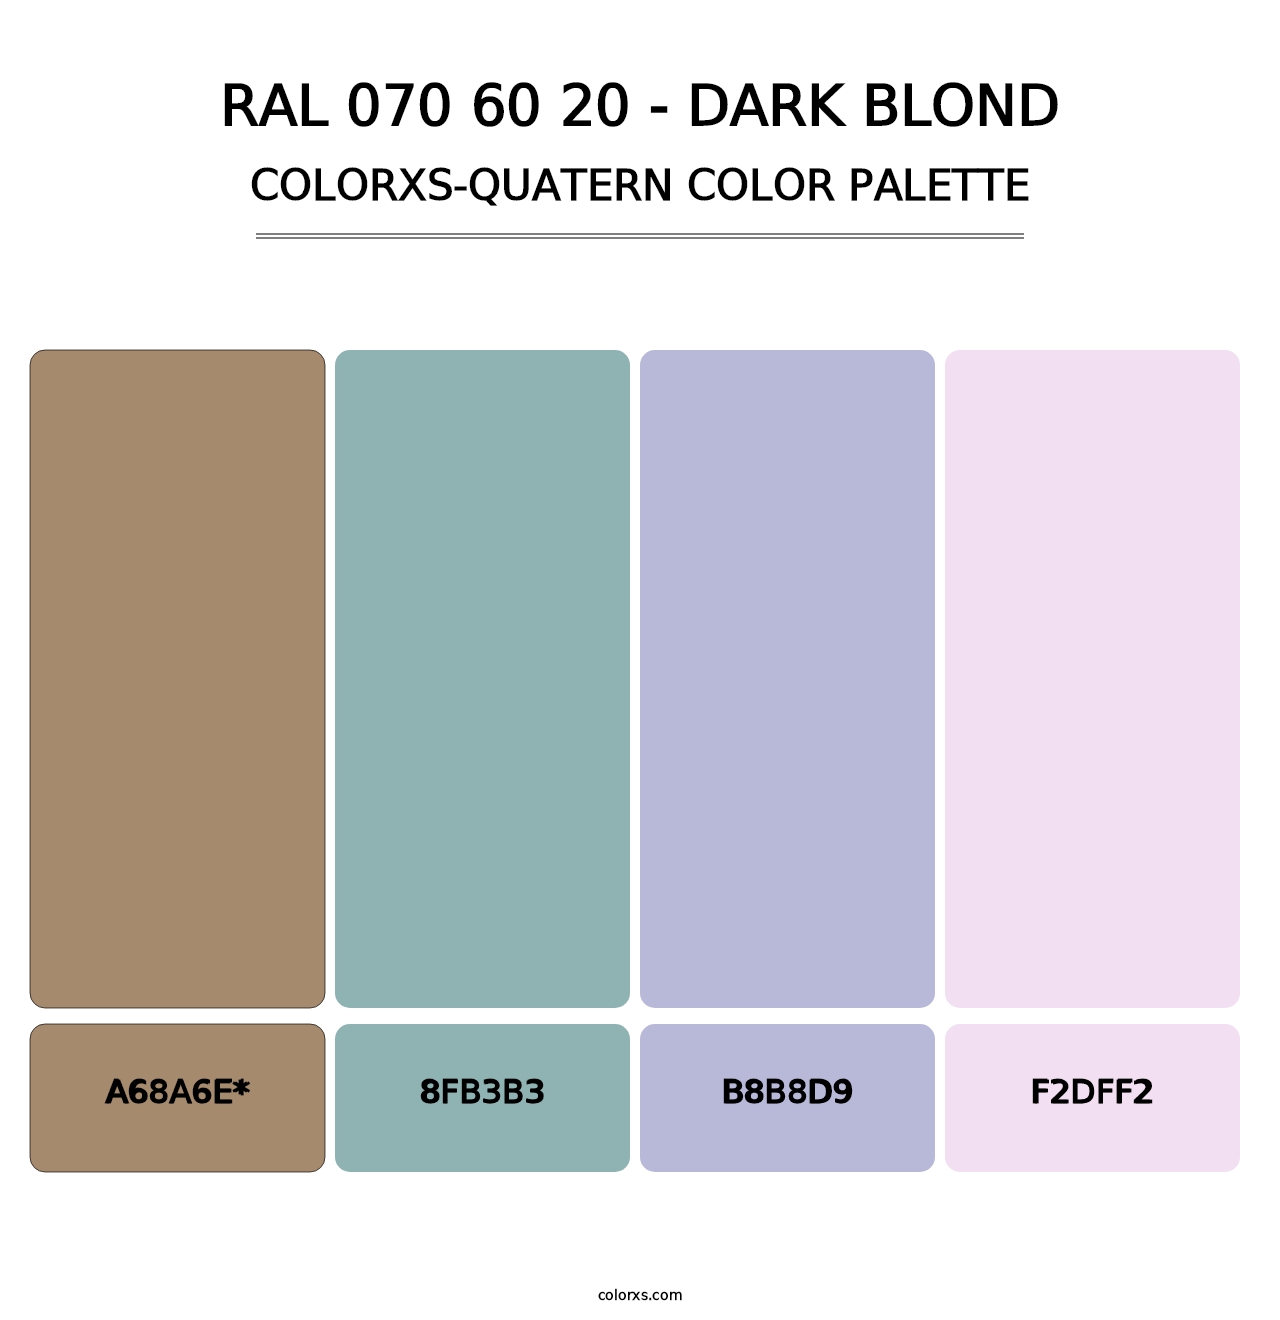 RAL 070 60 20 - Dark Blond - Colorxs Quatern Palette